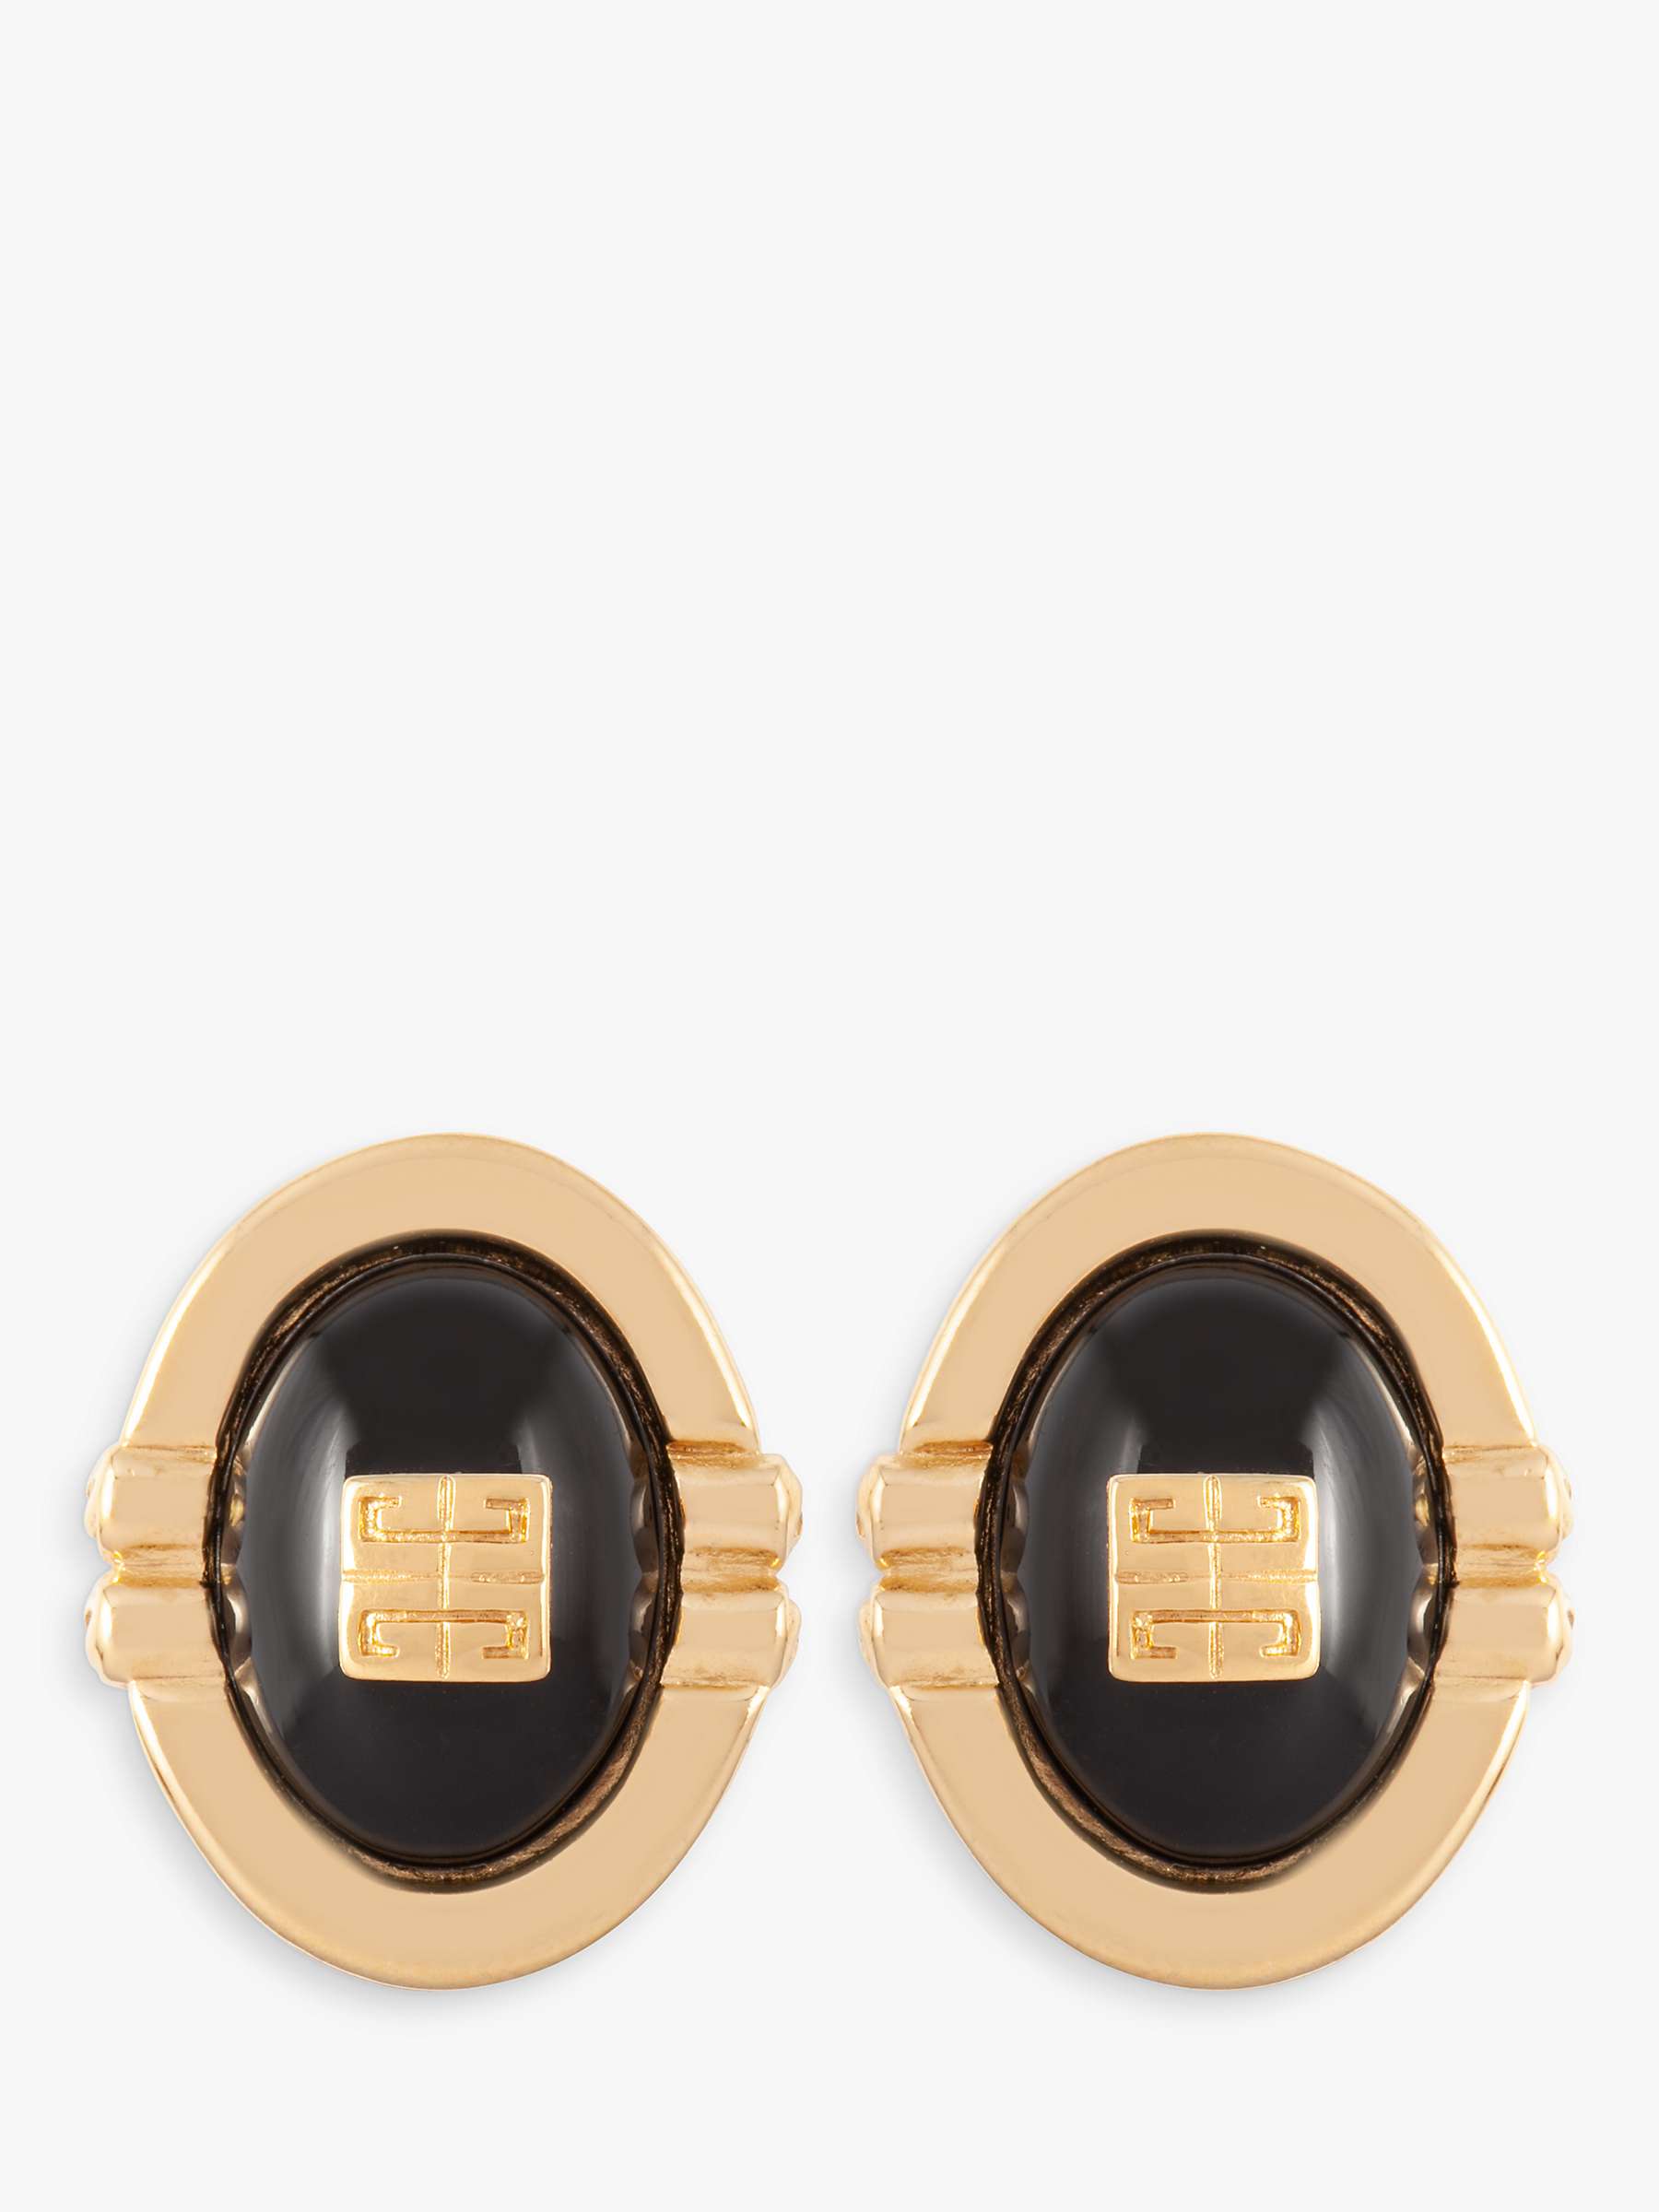 Buy Susan Caplan Vintage Givenchy Lucite Stud Earrings, Gold/Black Online at johnlewis.com